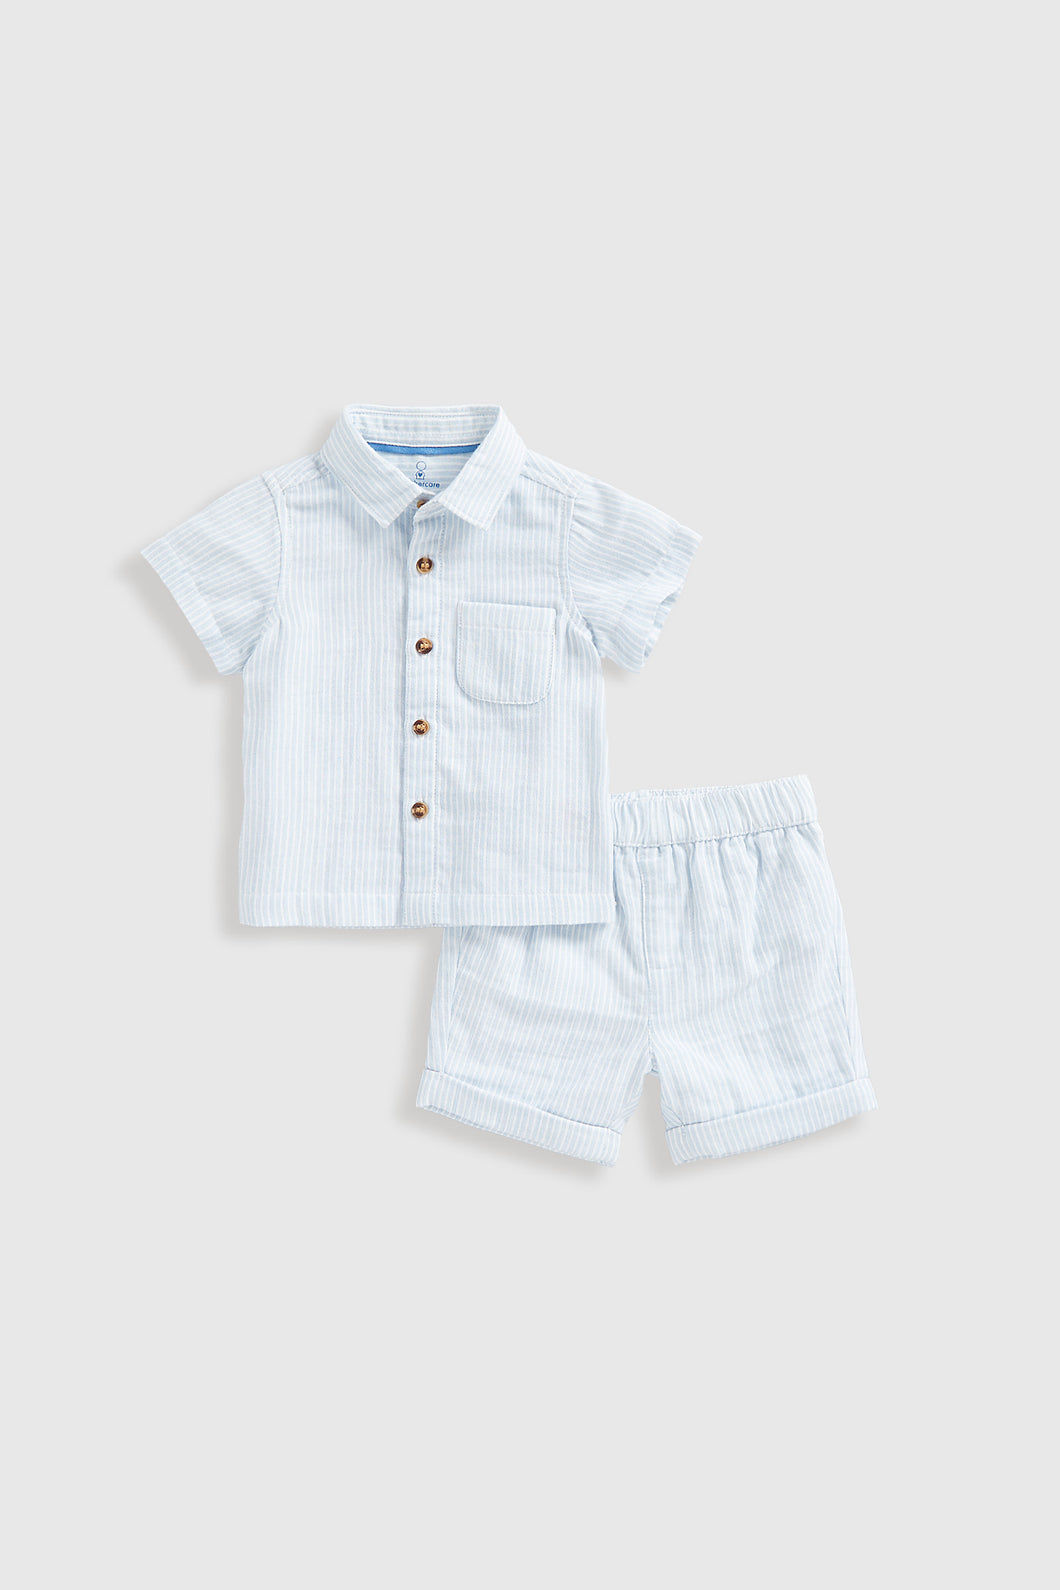 Mothercare Striped Shirt And Shorts Set